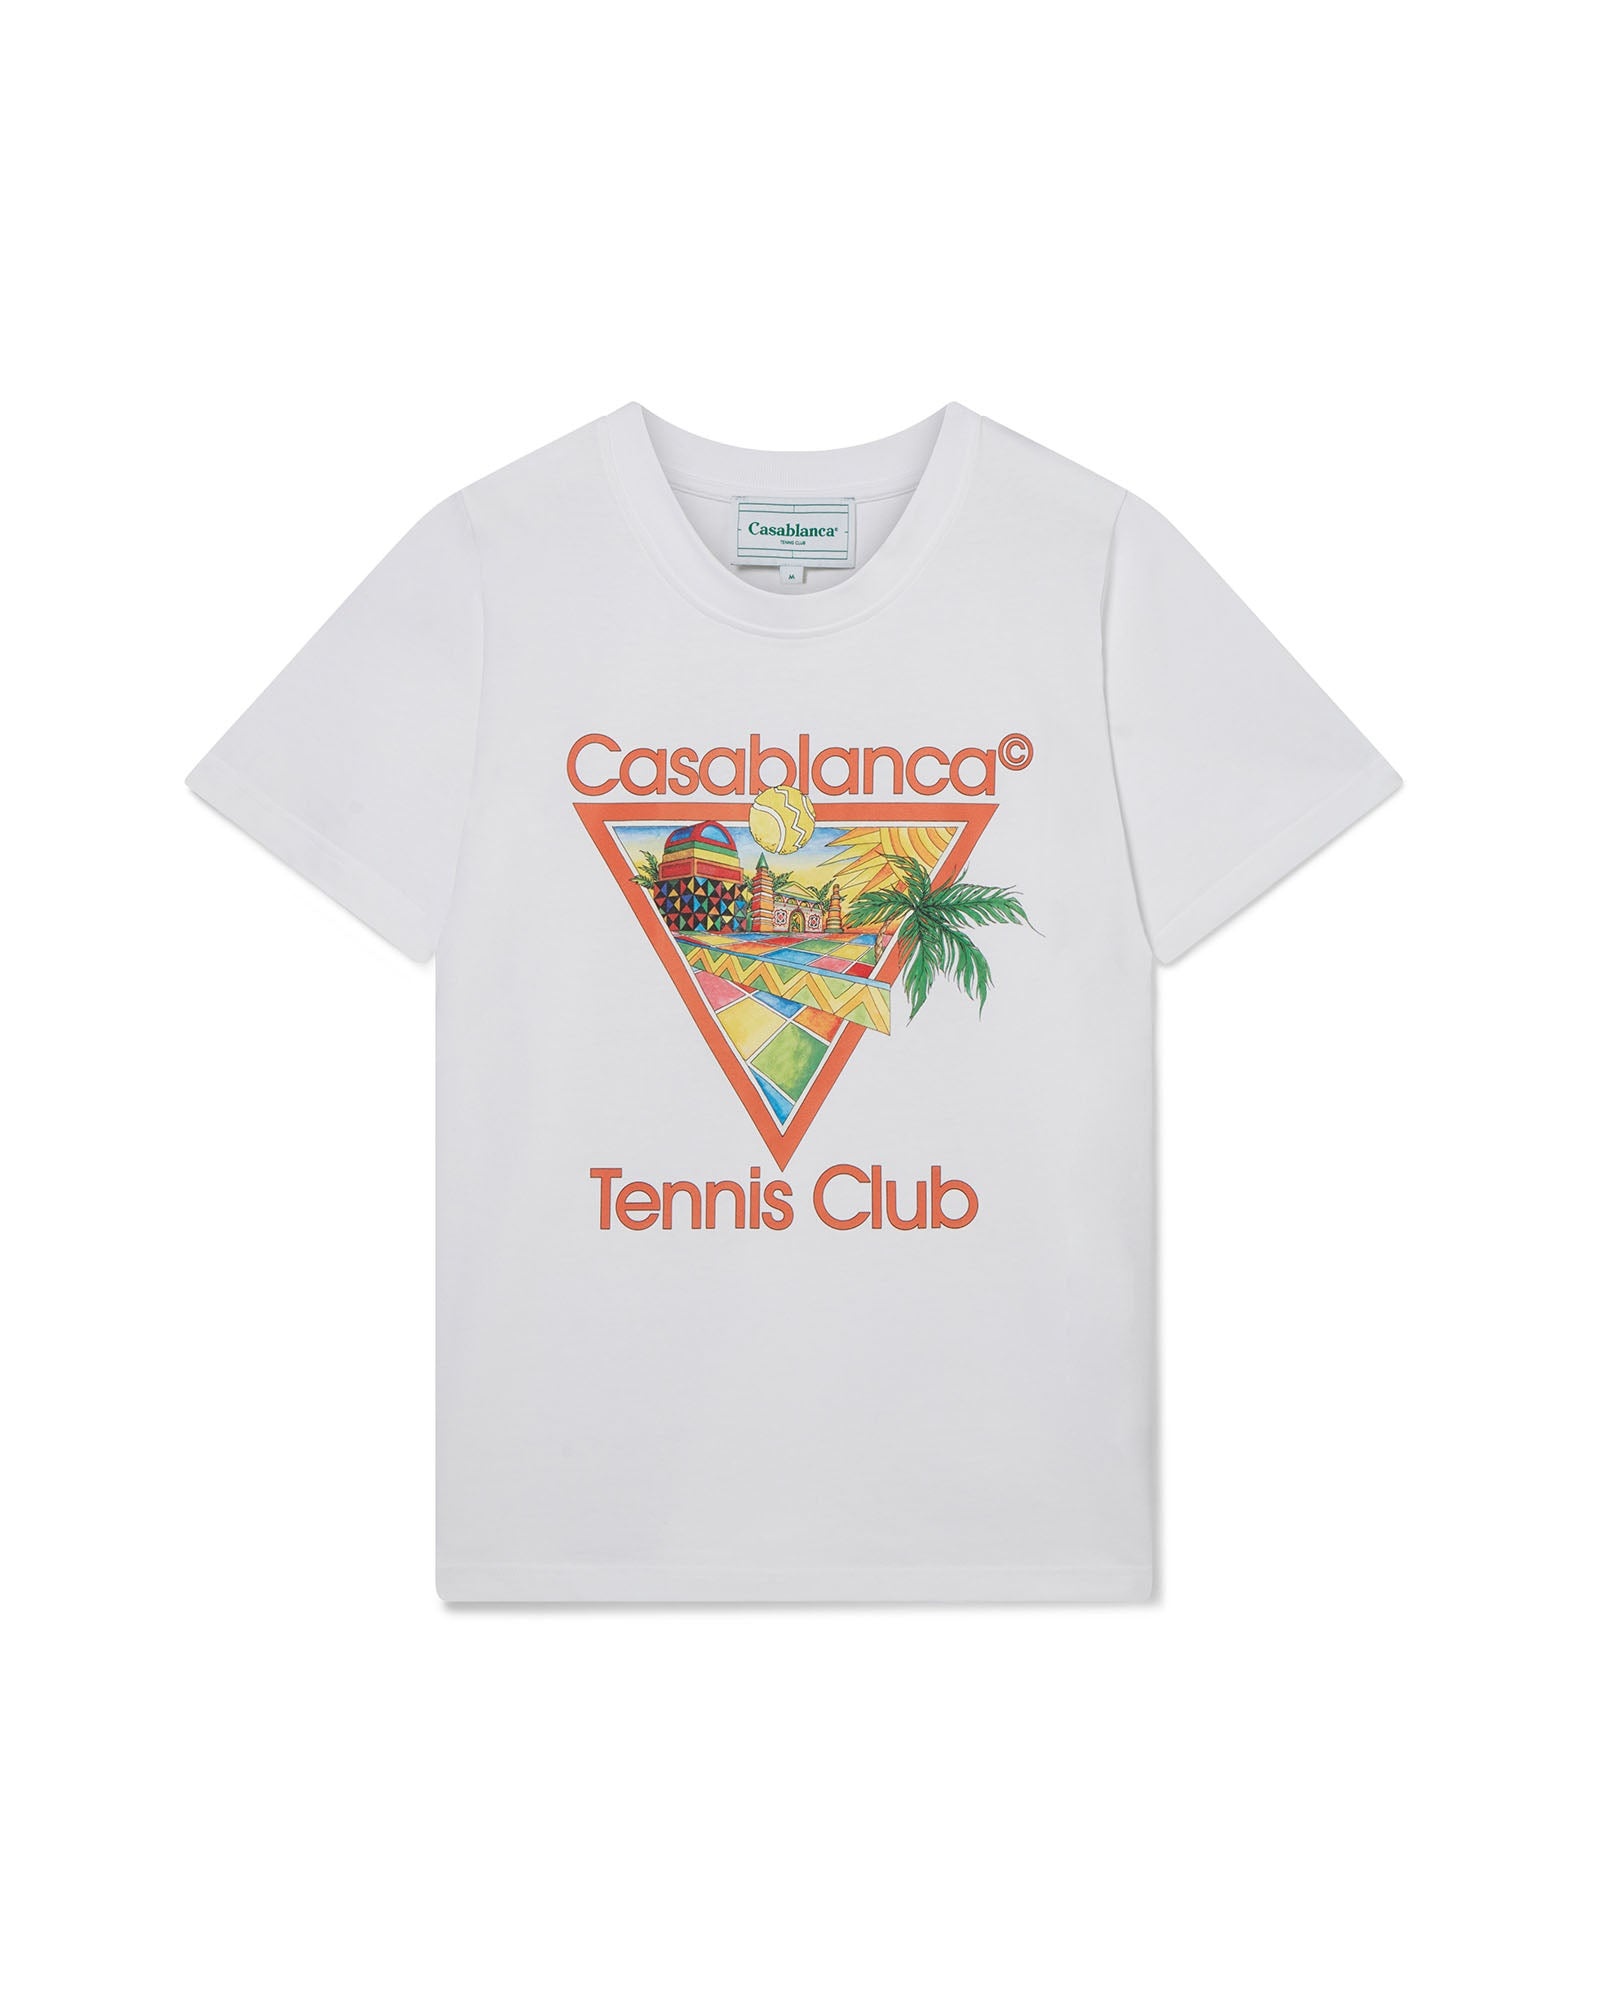 Afro Cubism Tennis Club T-Shirt - 1